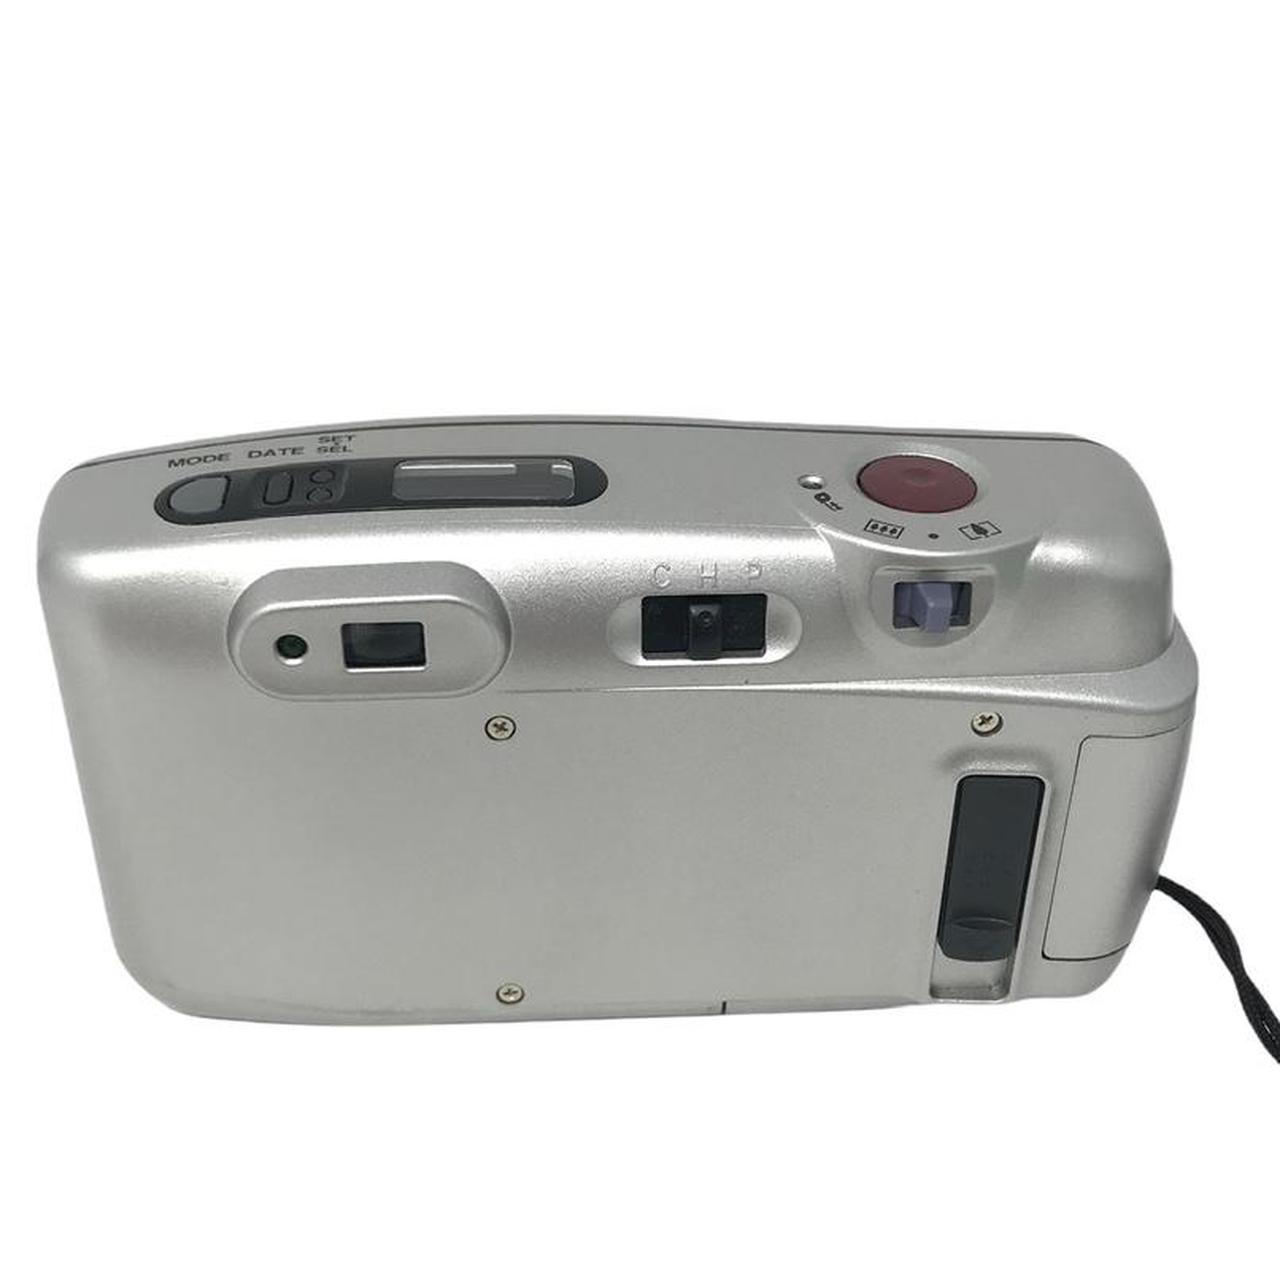 Product Image 4 - Fuji Fujifilm Endeavor Film Camera

New